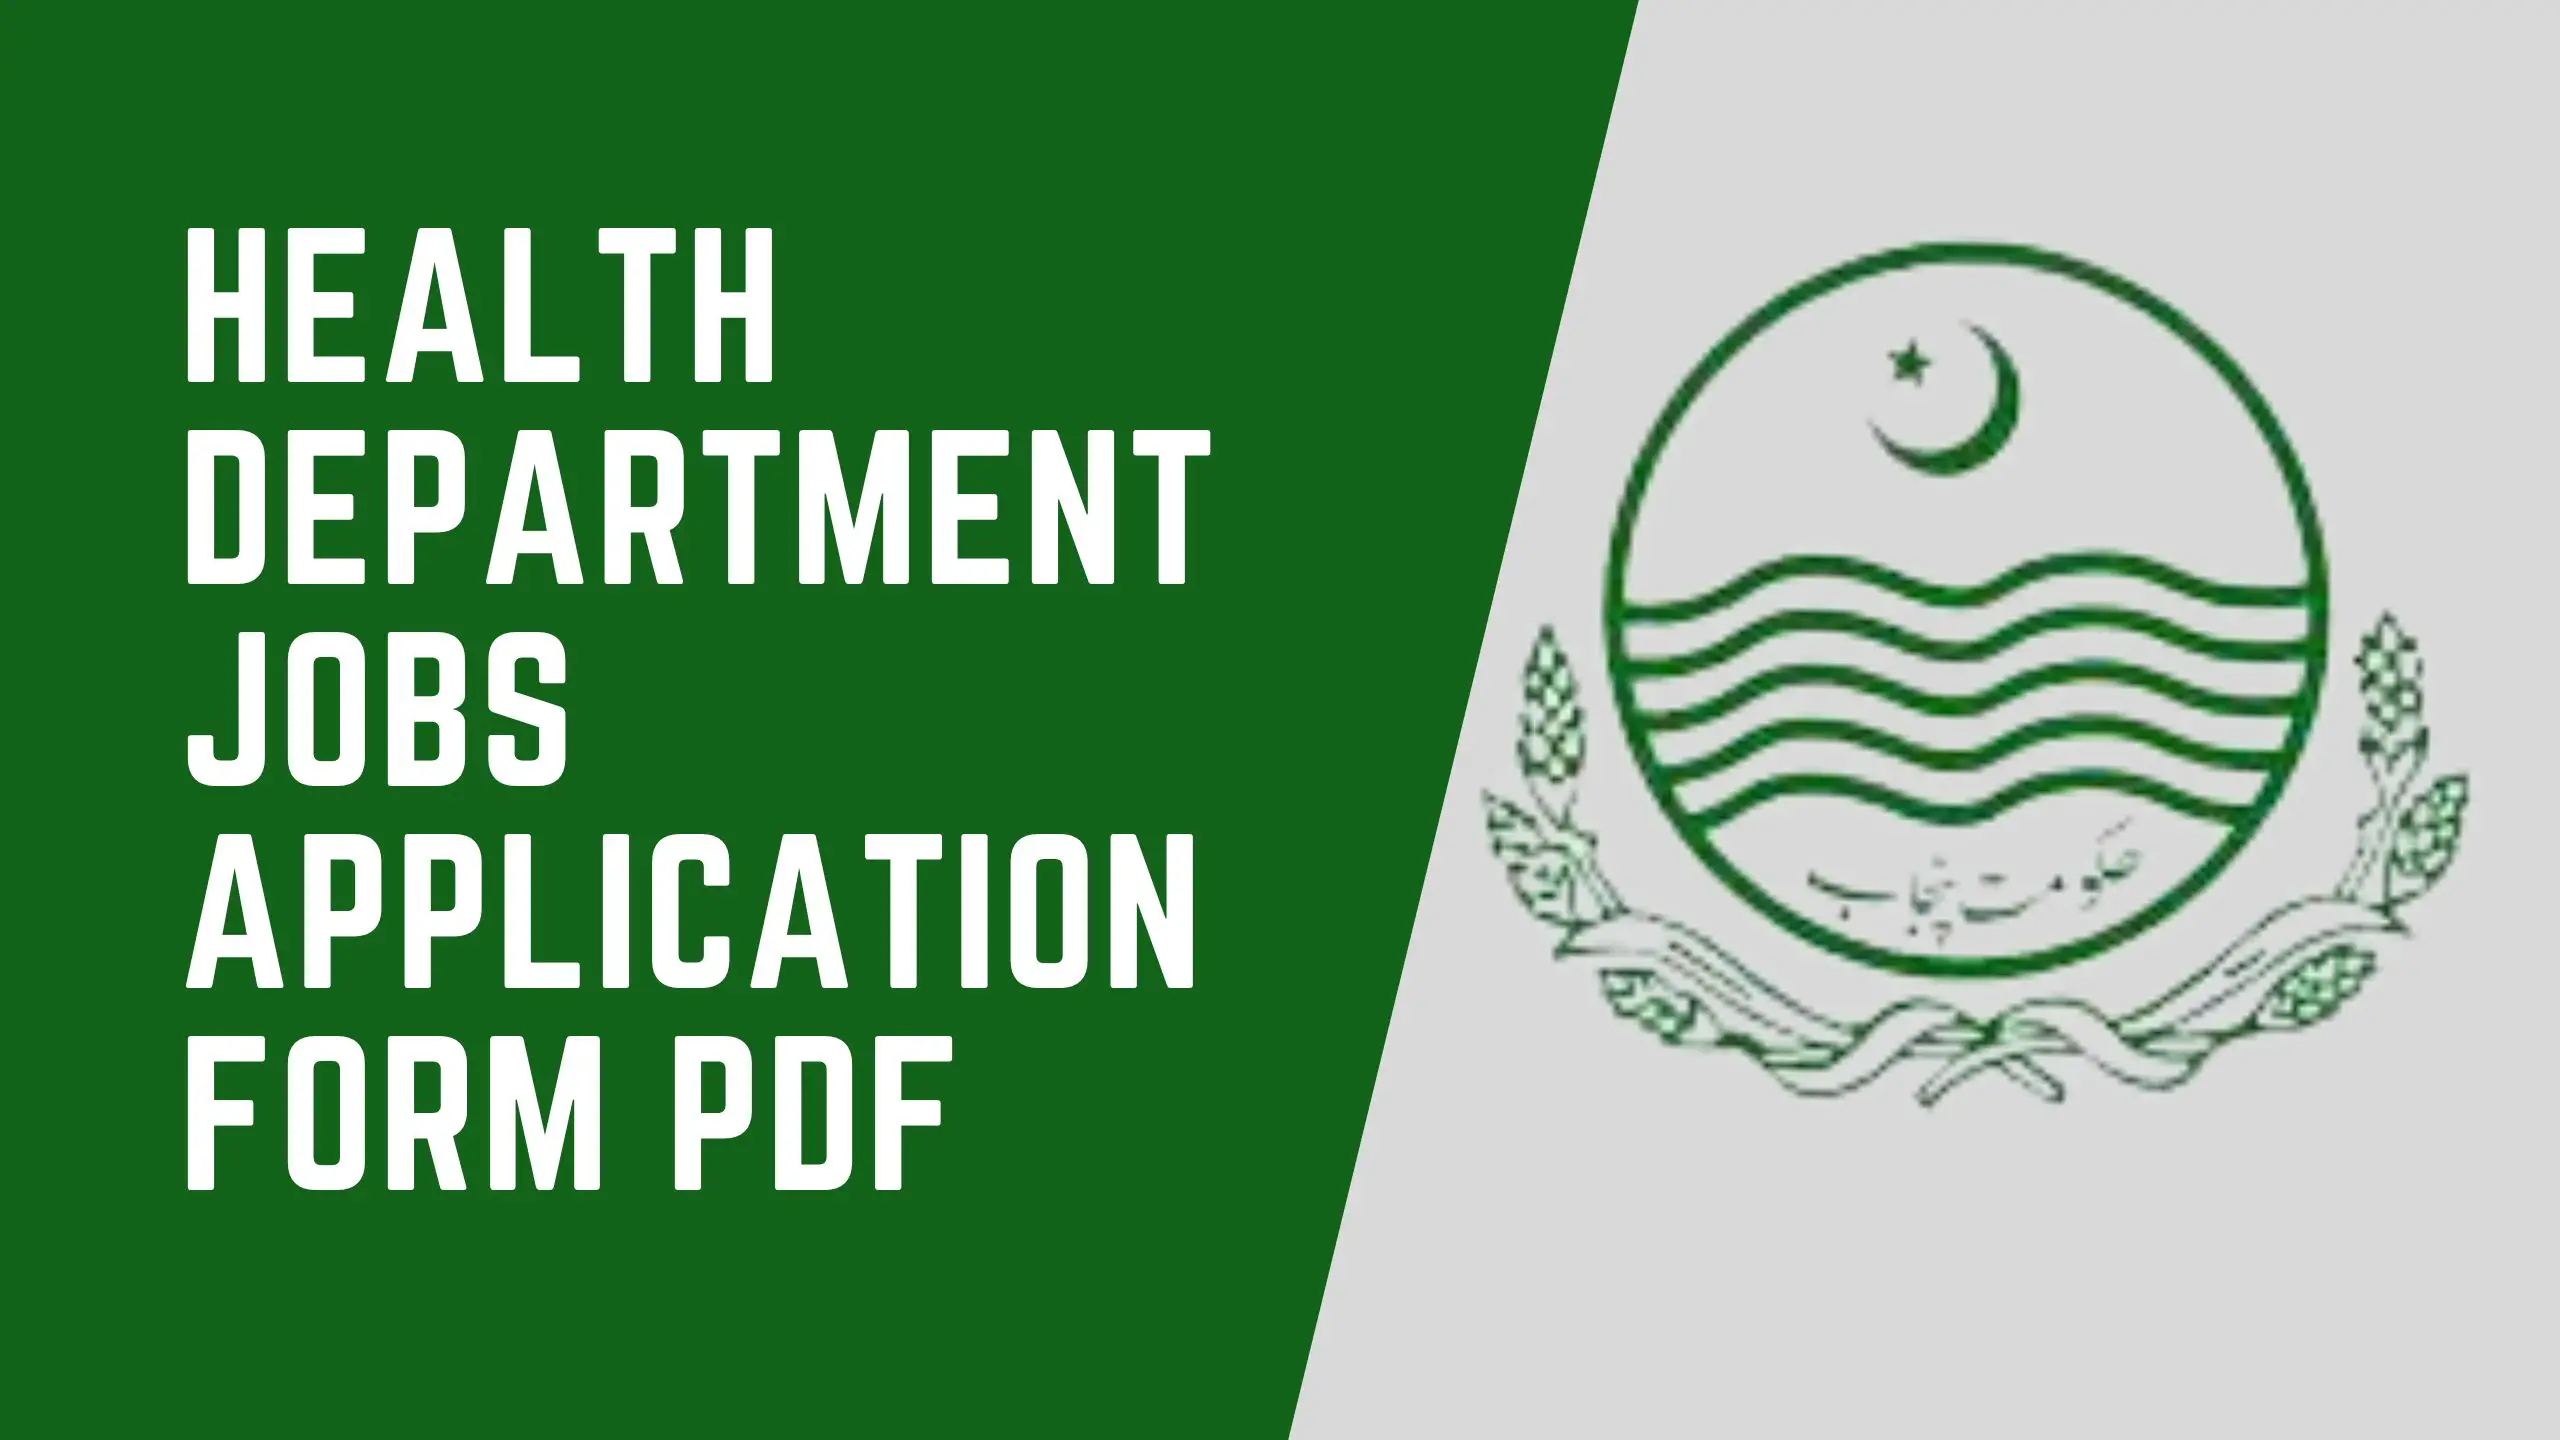 Health Department Jobs Application Form Pdf